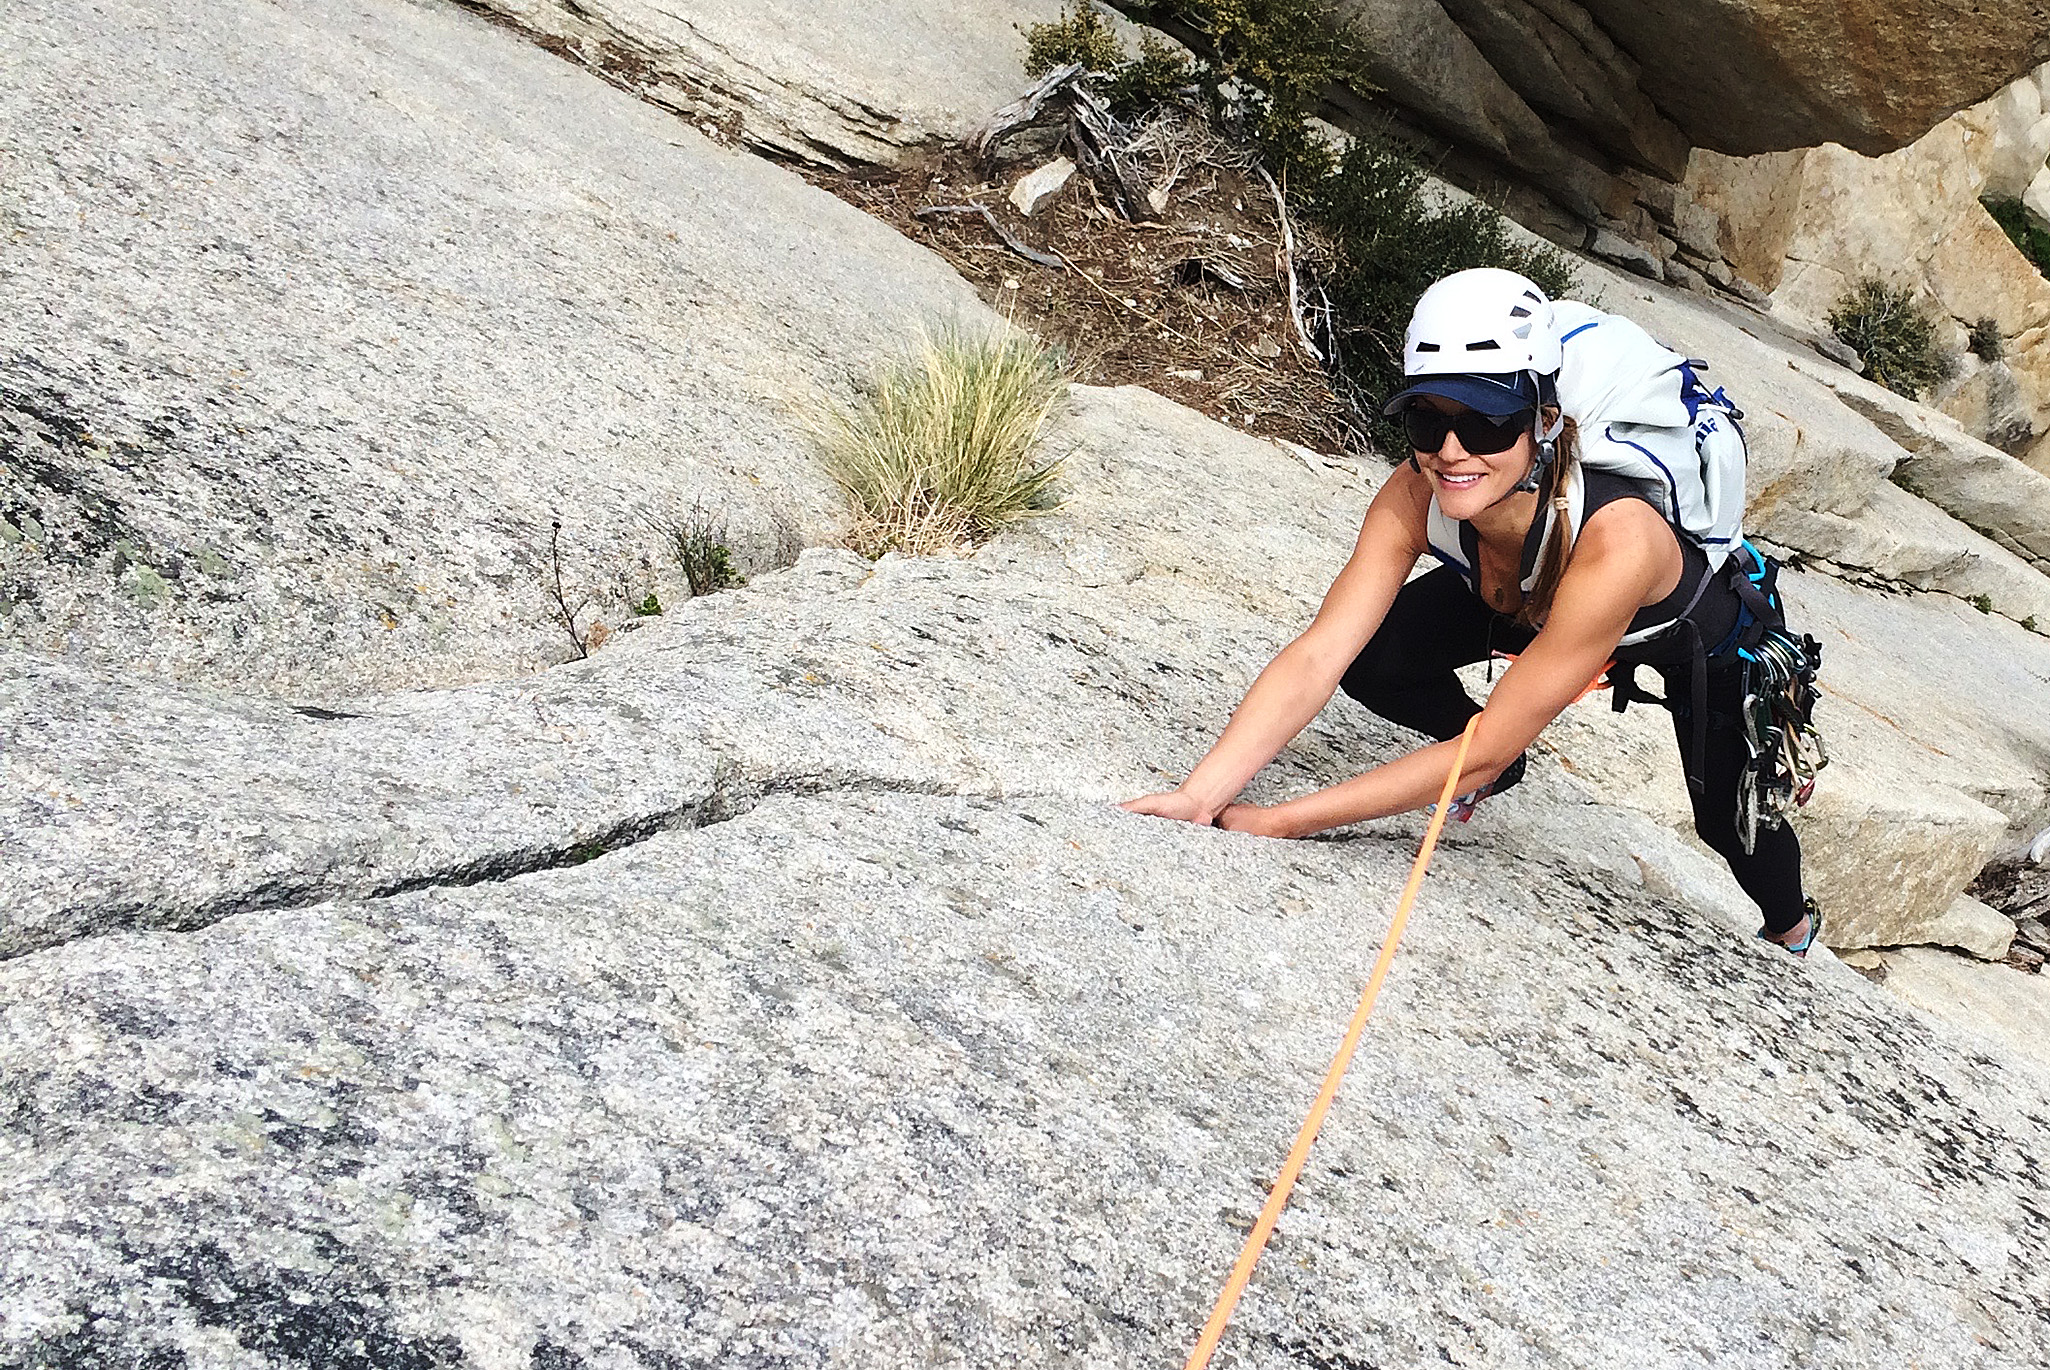 Women's Trad Climbing Clinic › Sierra Mountain Center